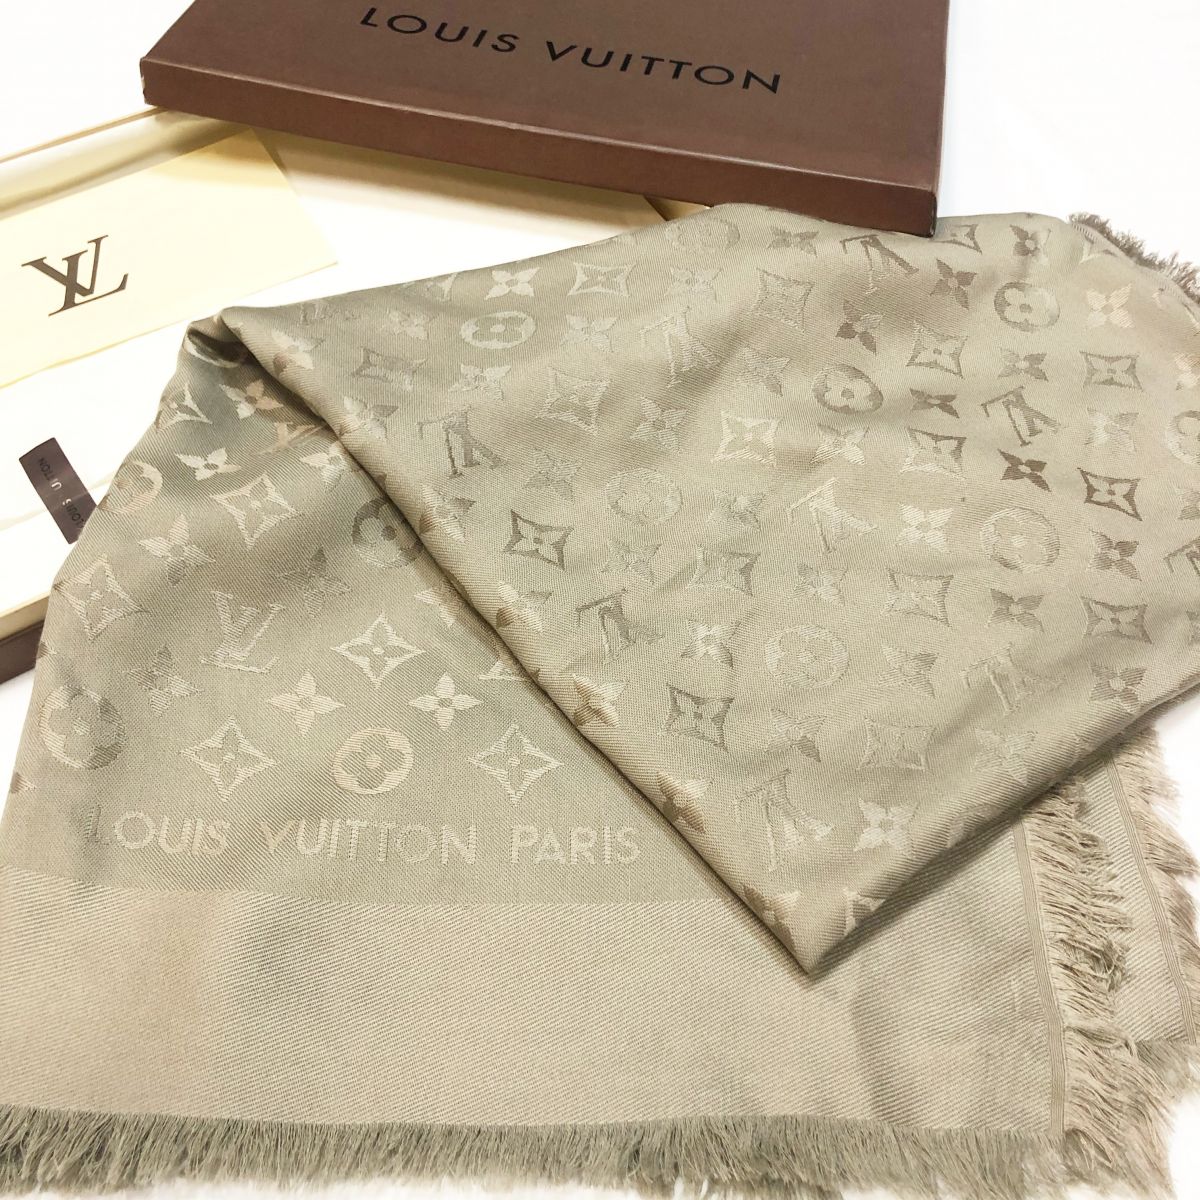 Палантин Louis Vuitton размер 140/140 цена 23 078 руб 